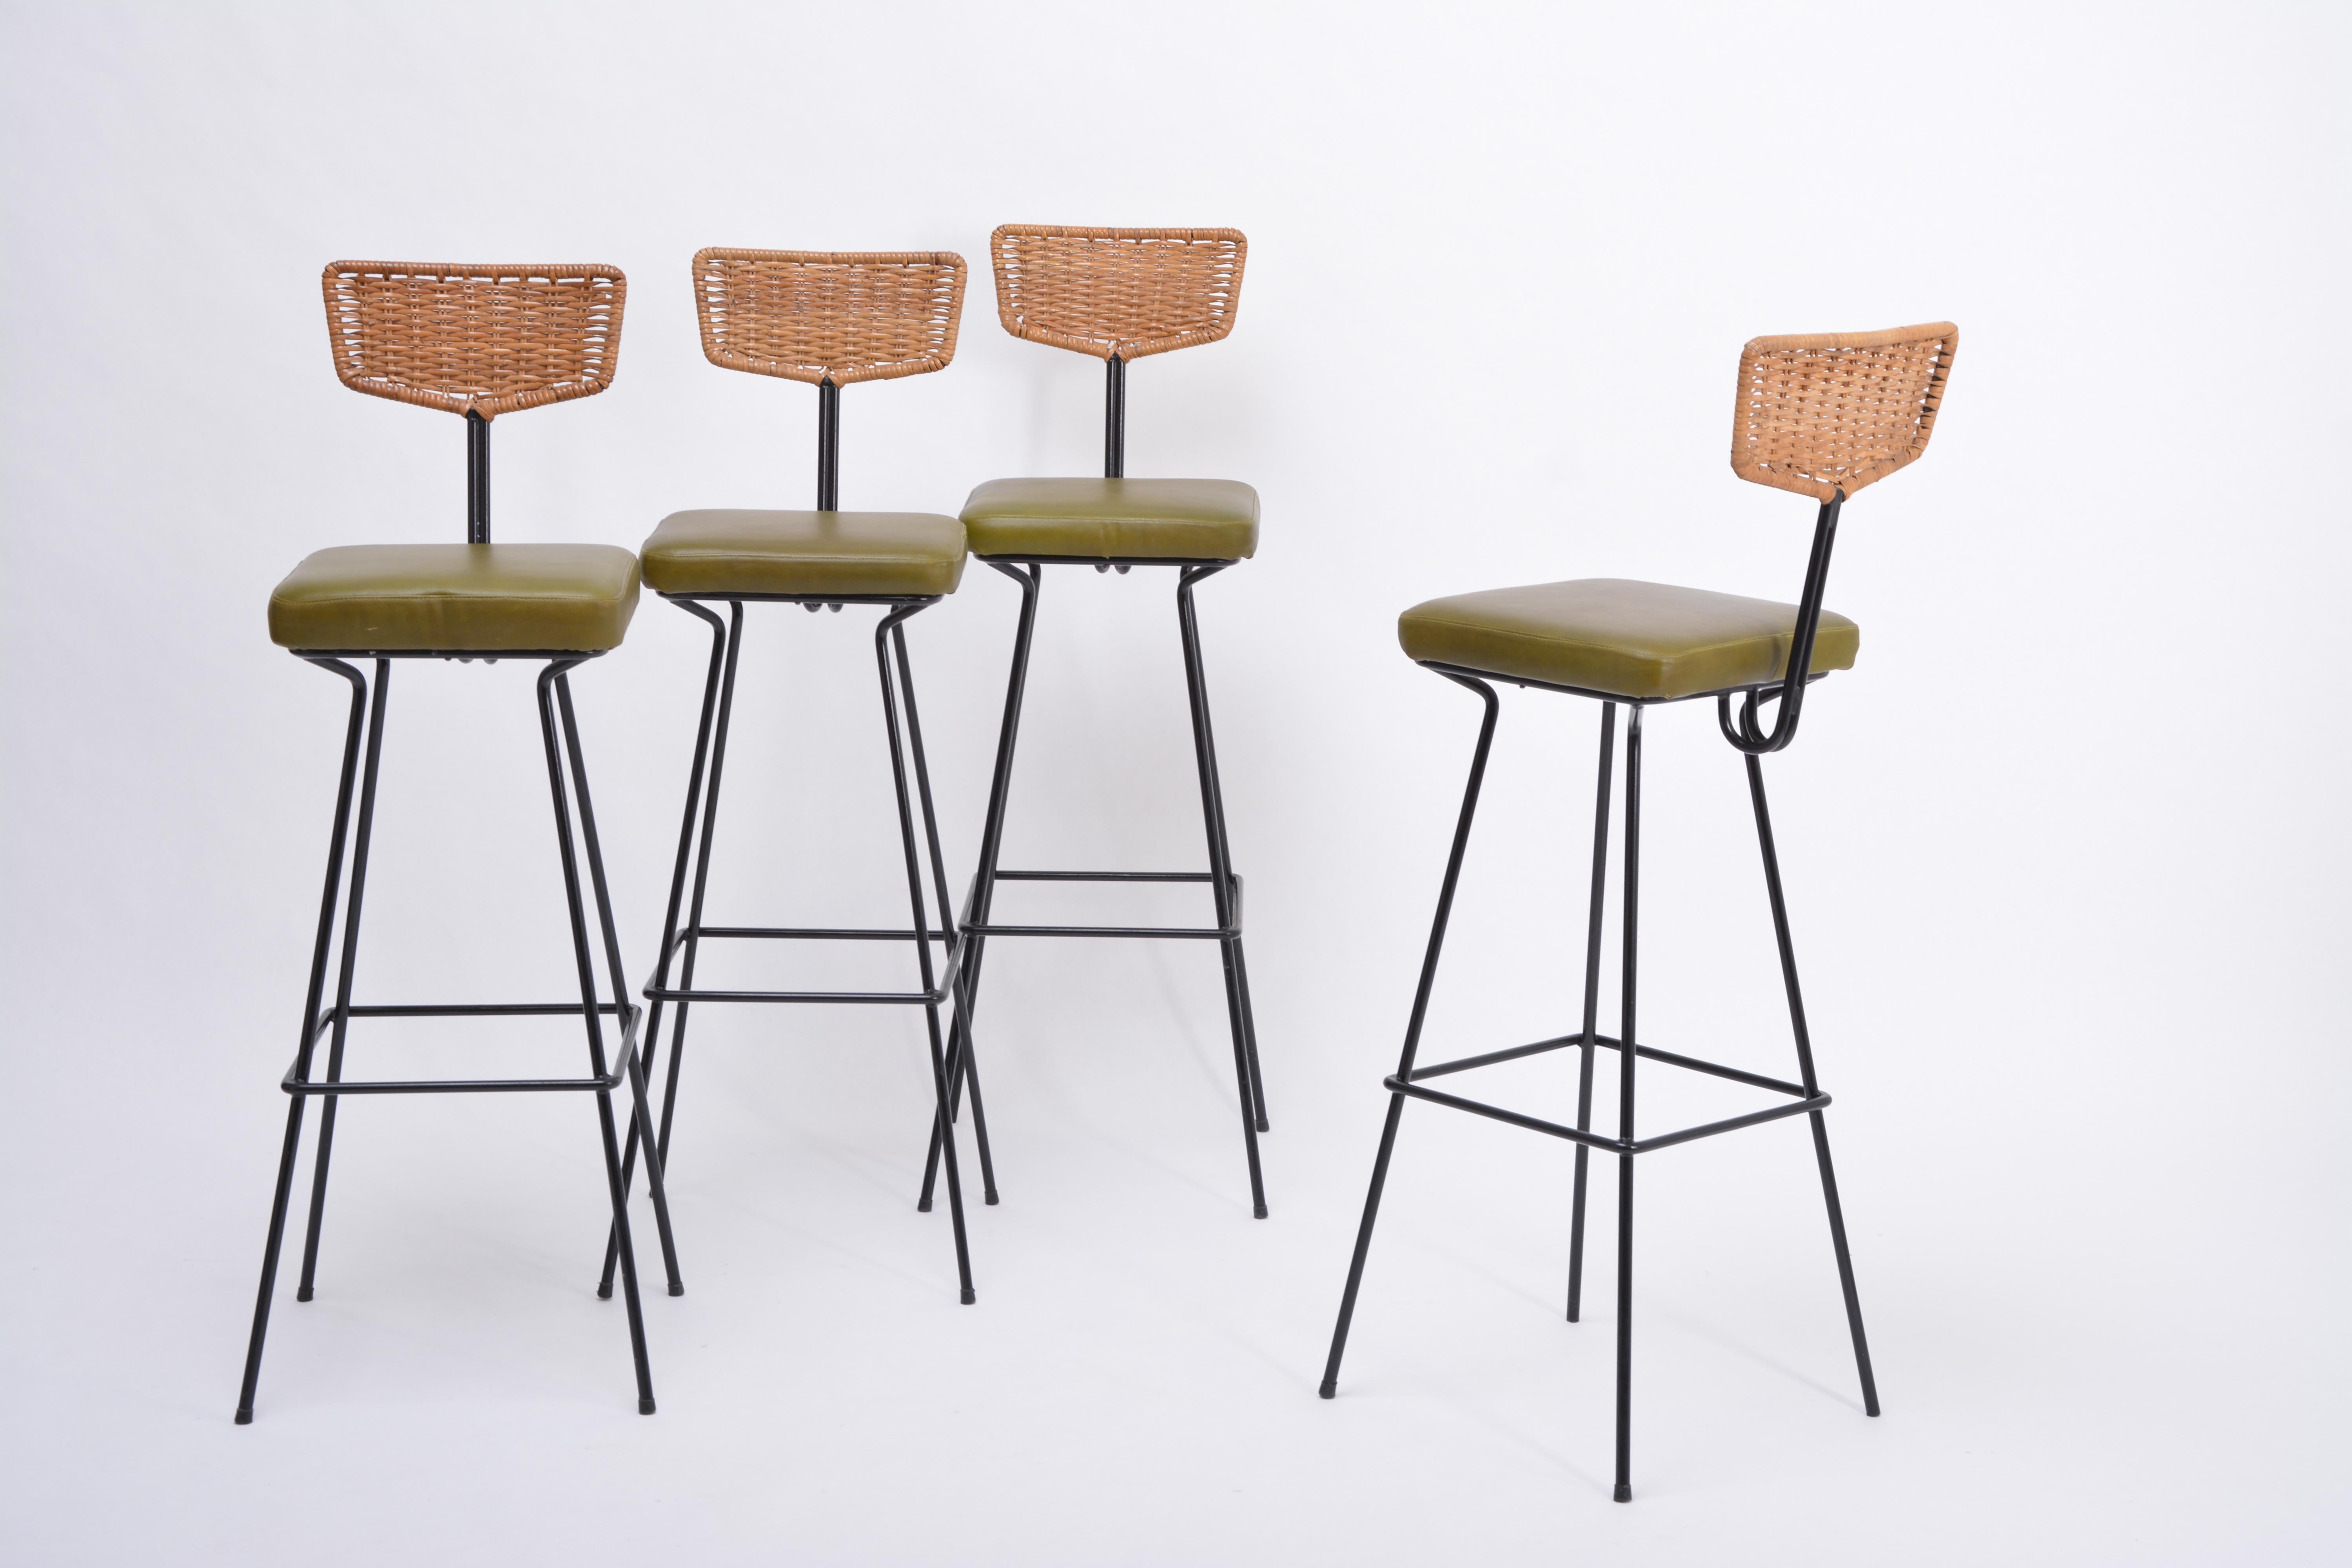 20th Century Set of four Mid-Century Modern wicker bar stools by Herta Maria Witzemann